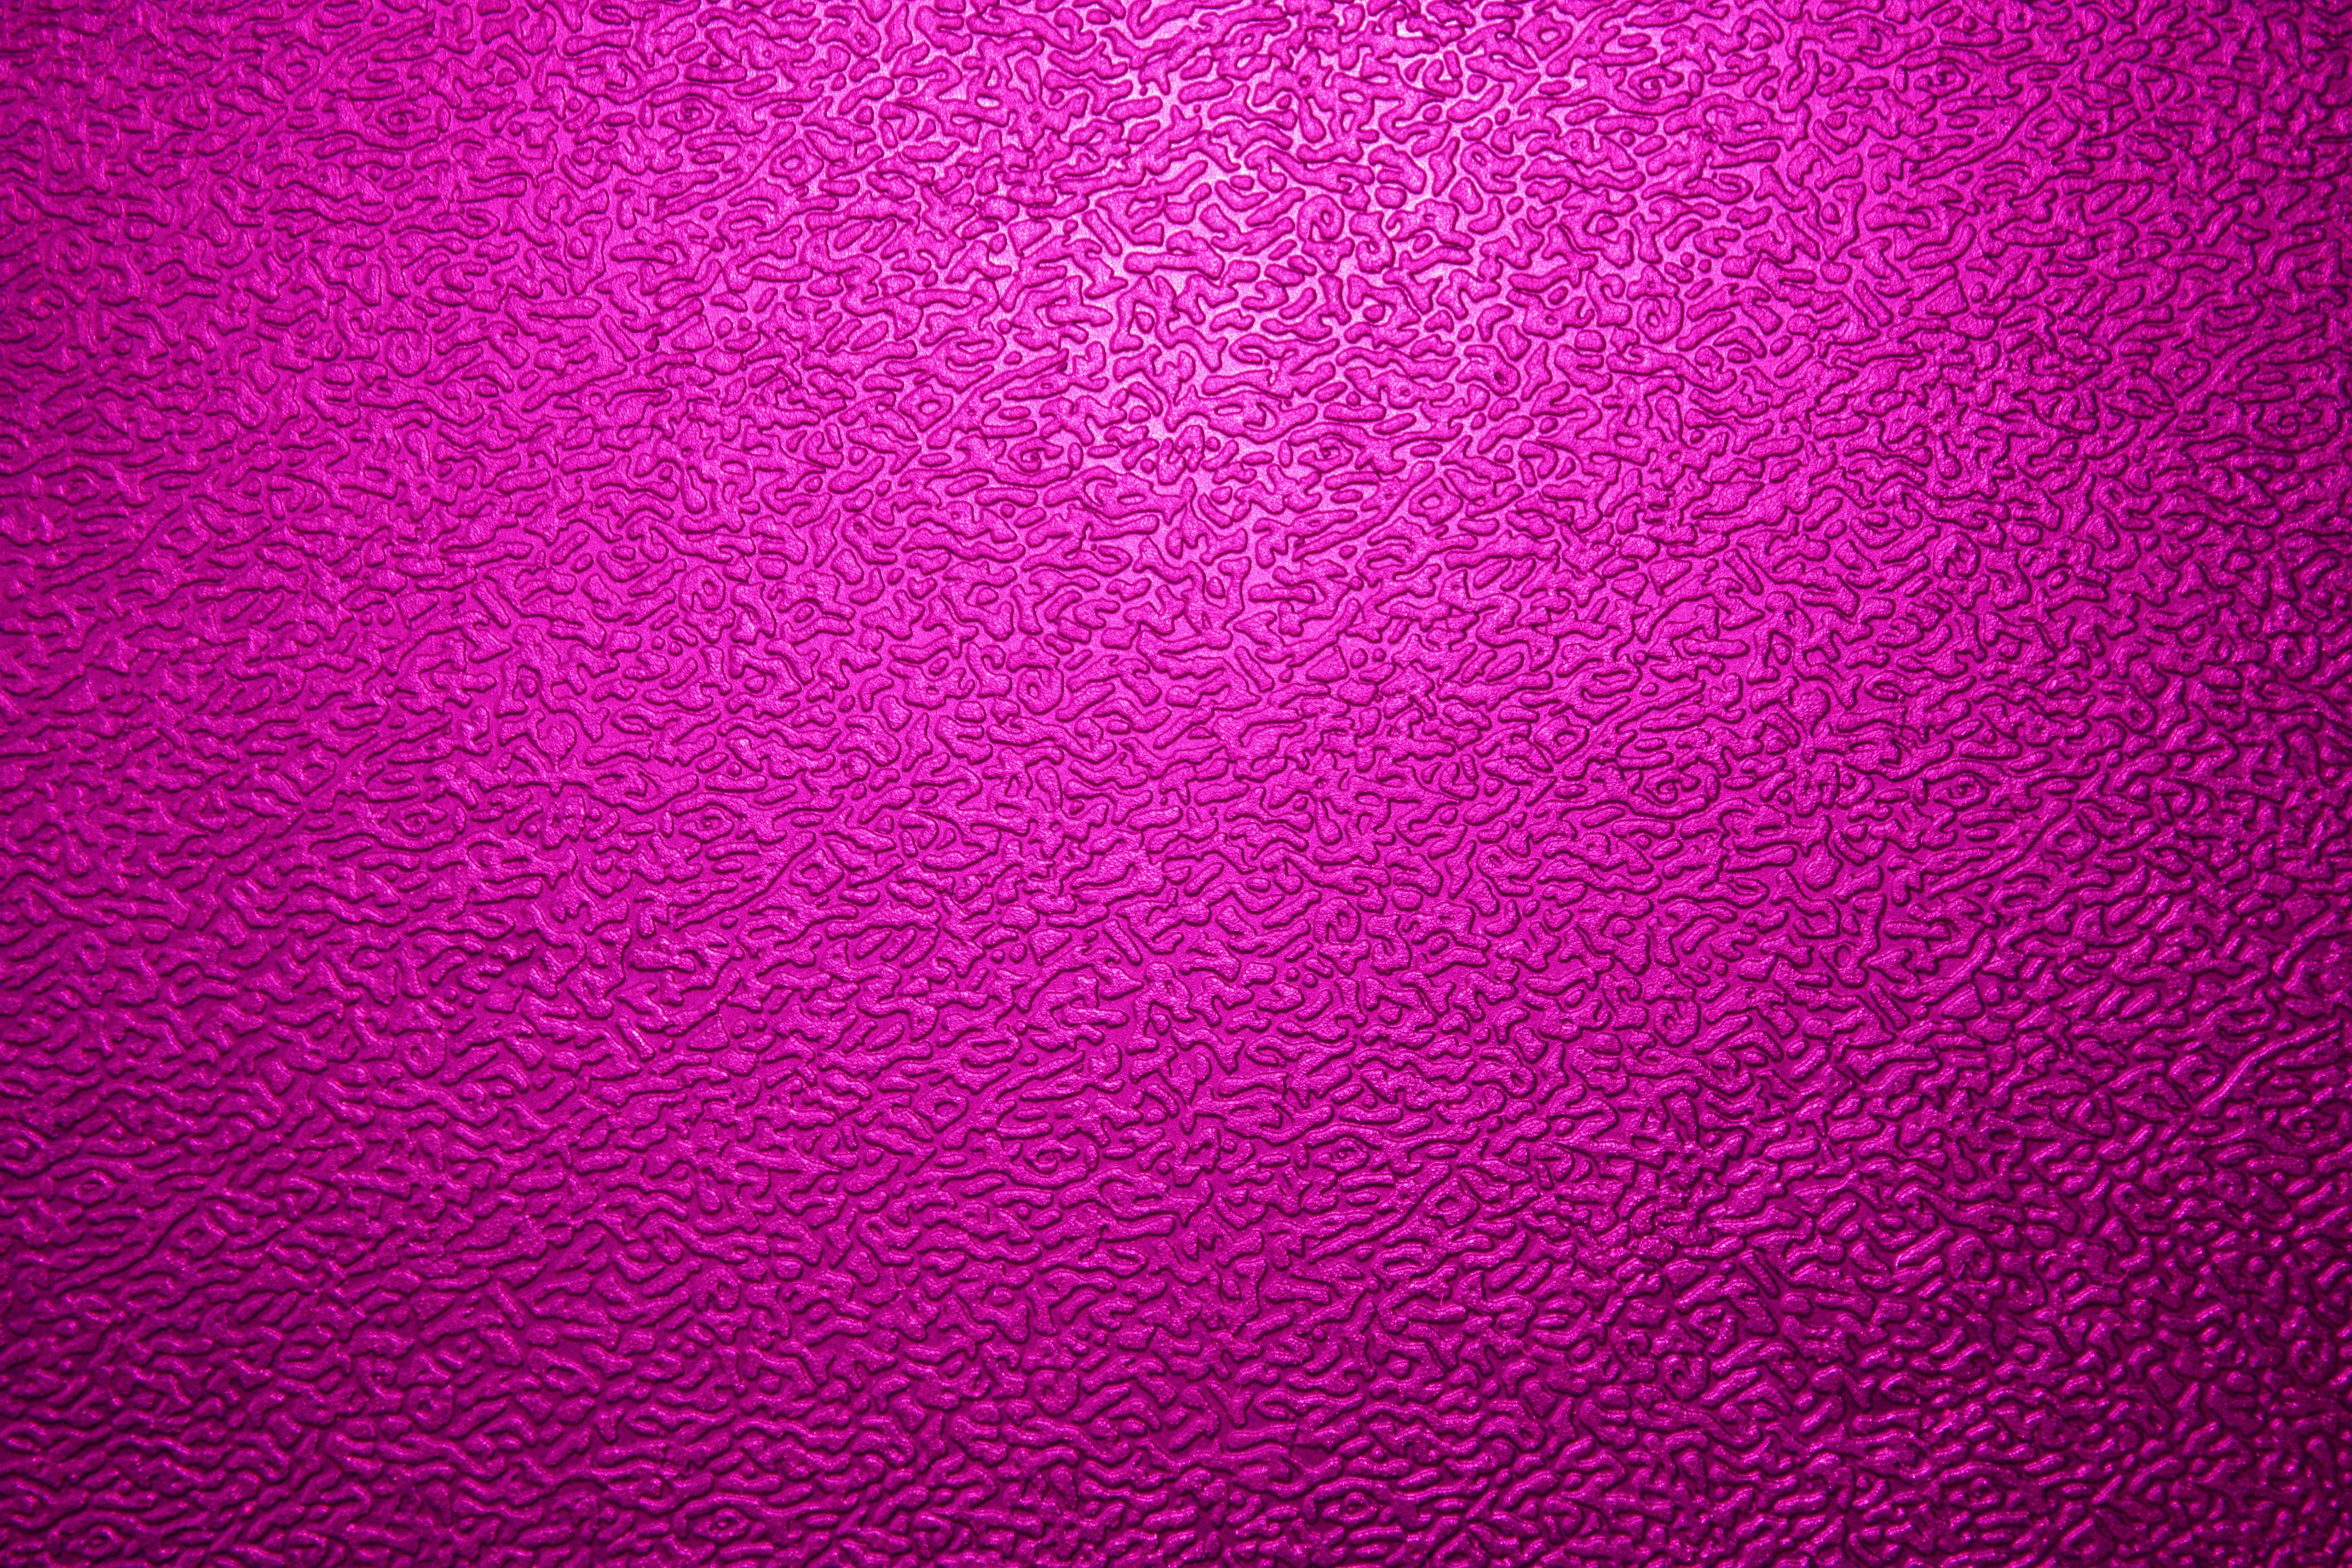 Textured Hot Pink Plastic Close Up Picture | Free Photograph | Photos  Public Domain